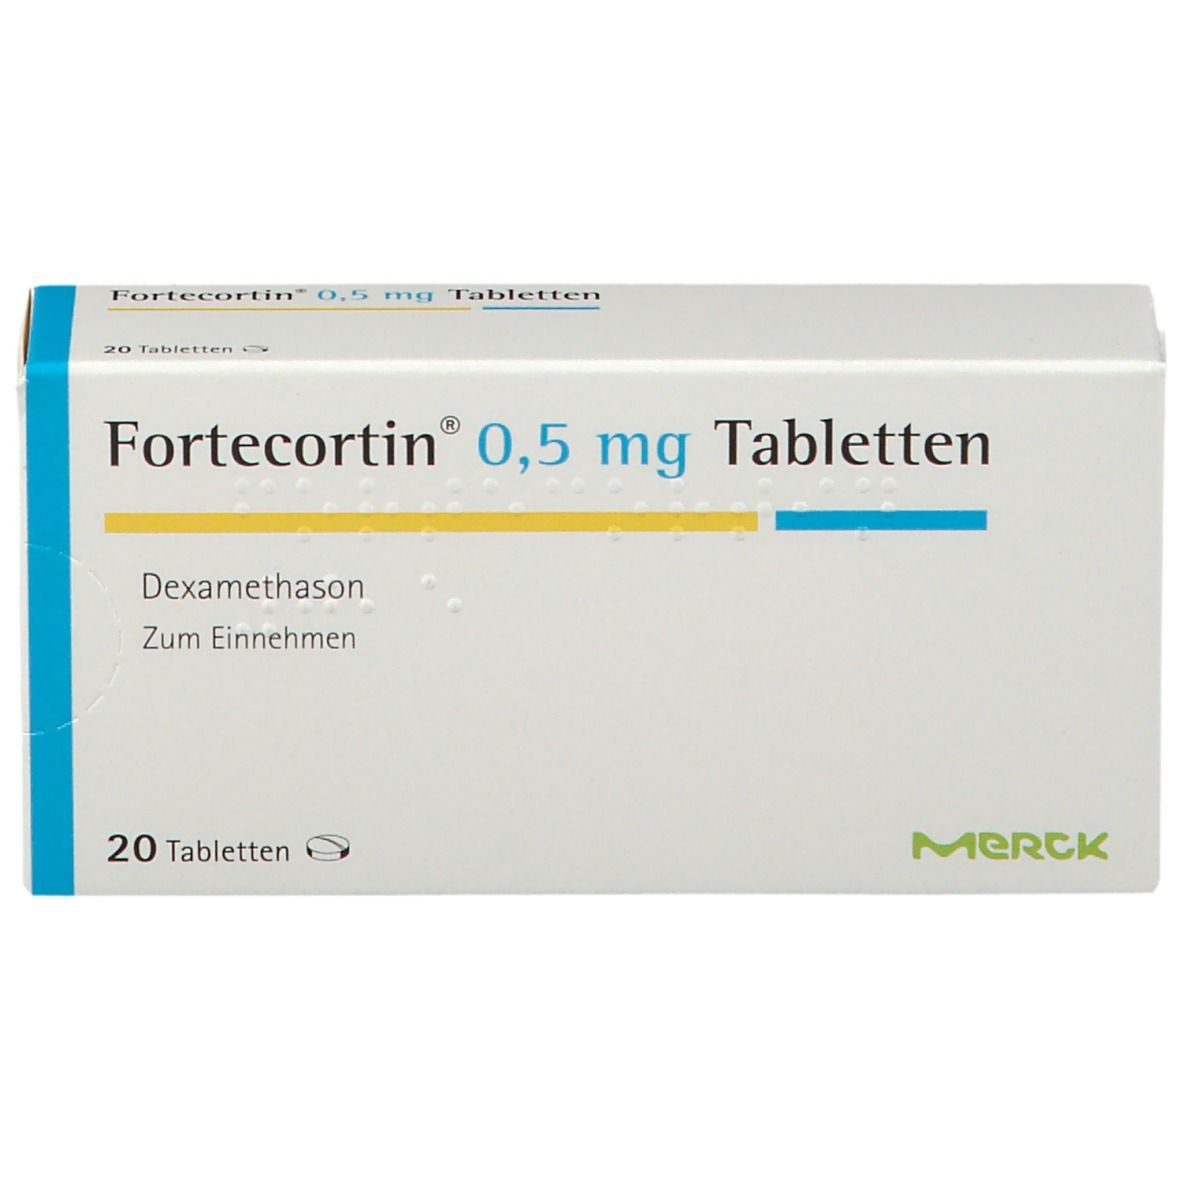 Fortecortin® 0,5 mg